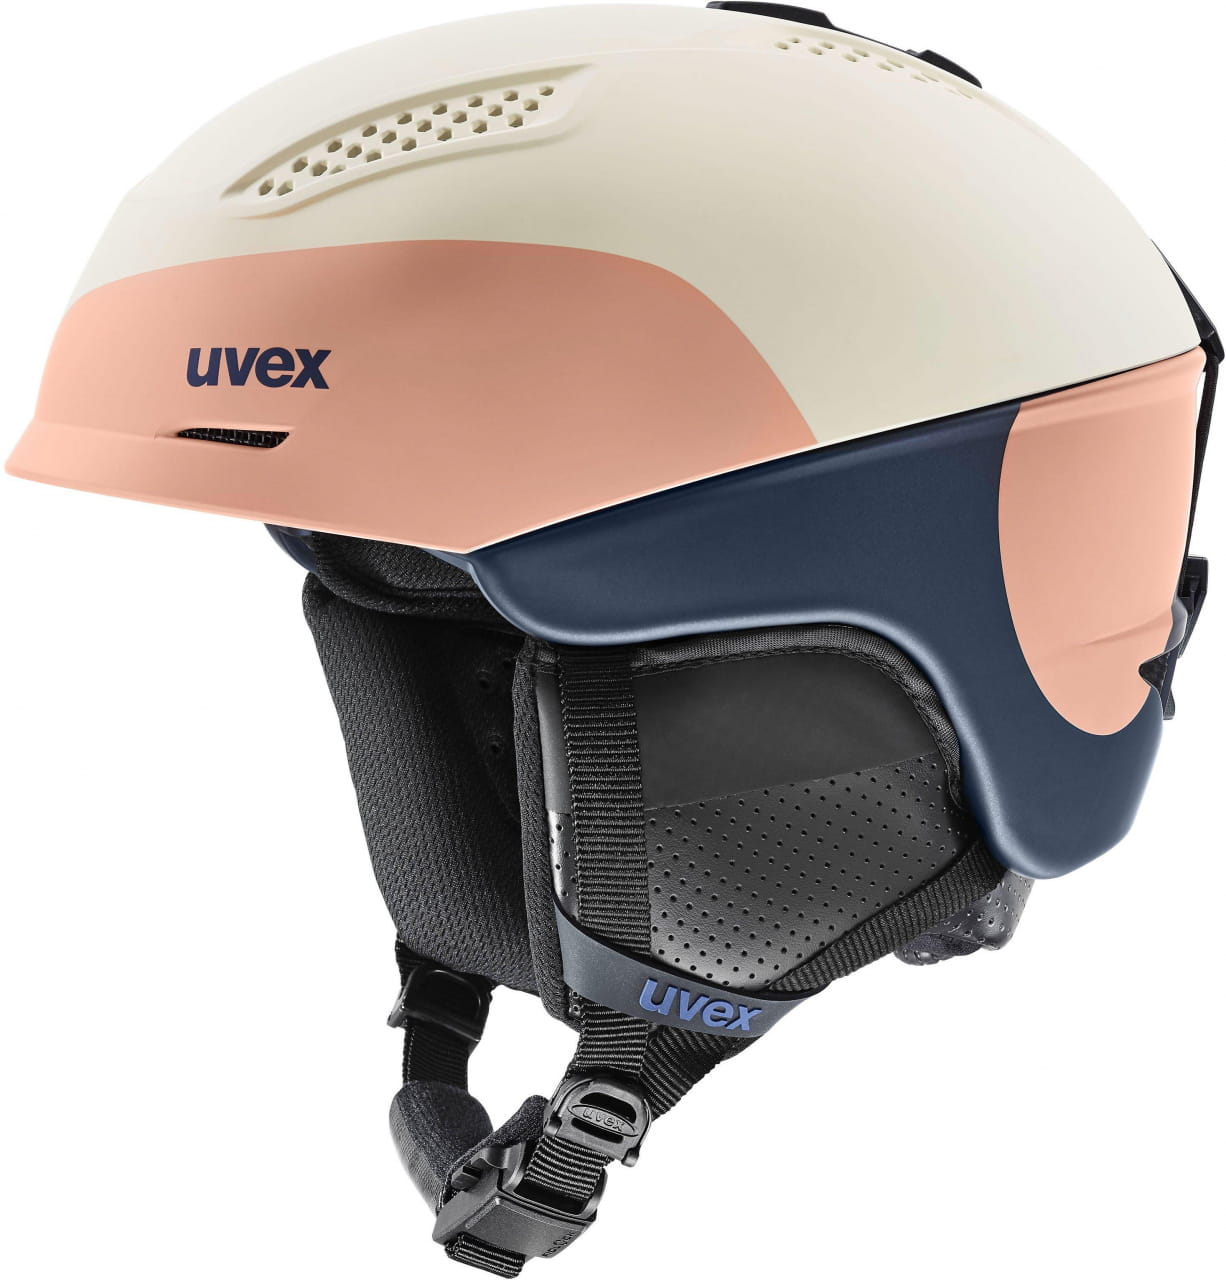 Dames skihelm Uvex Ultra Pro W